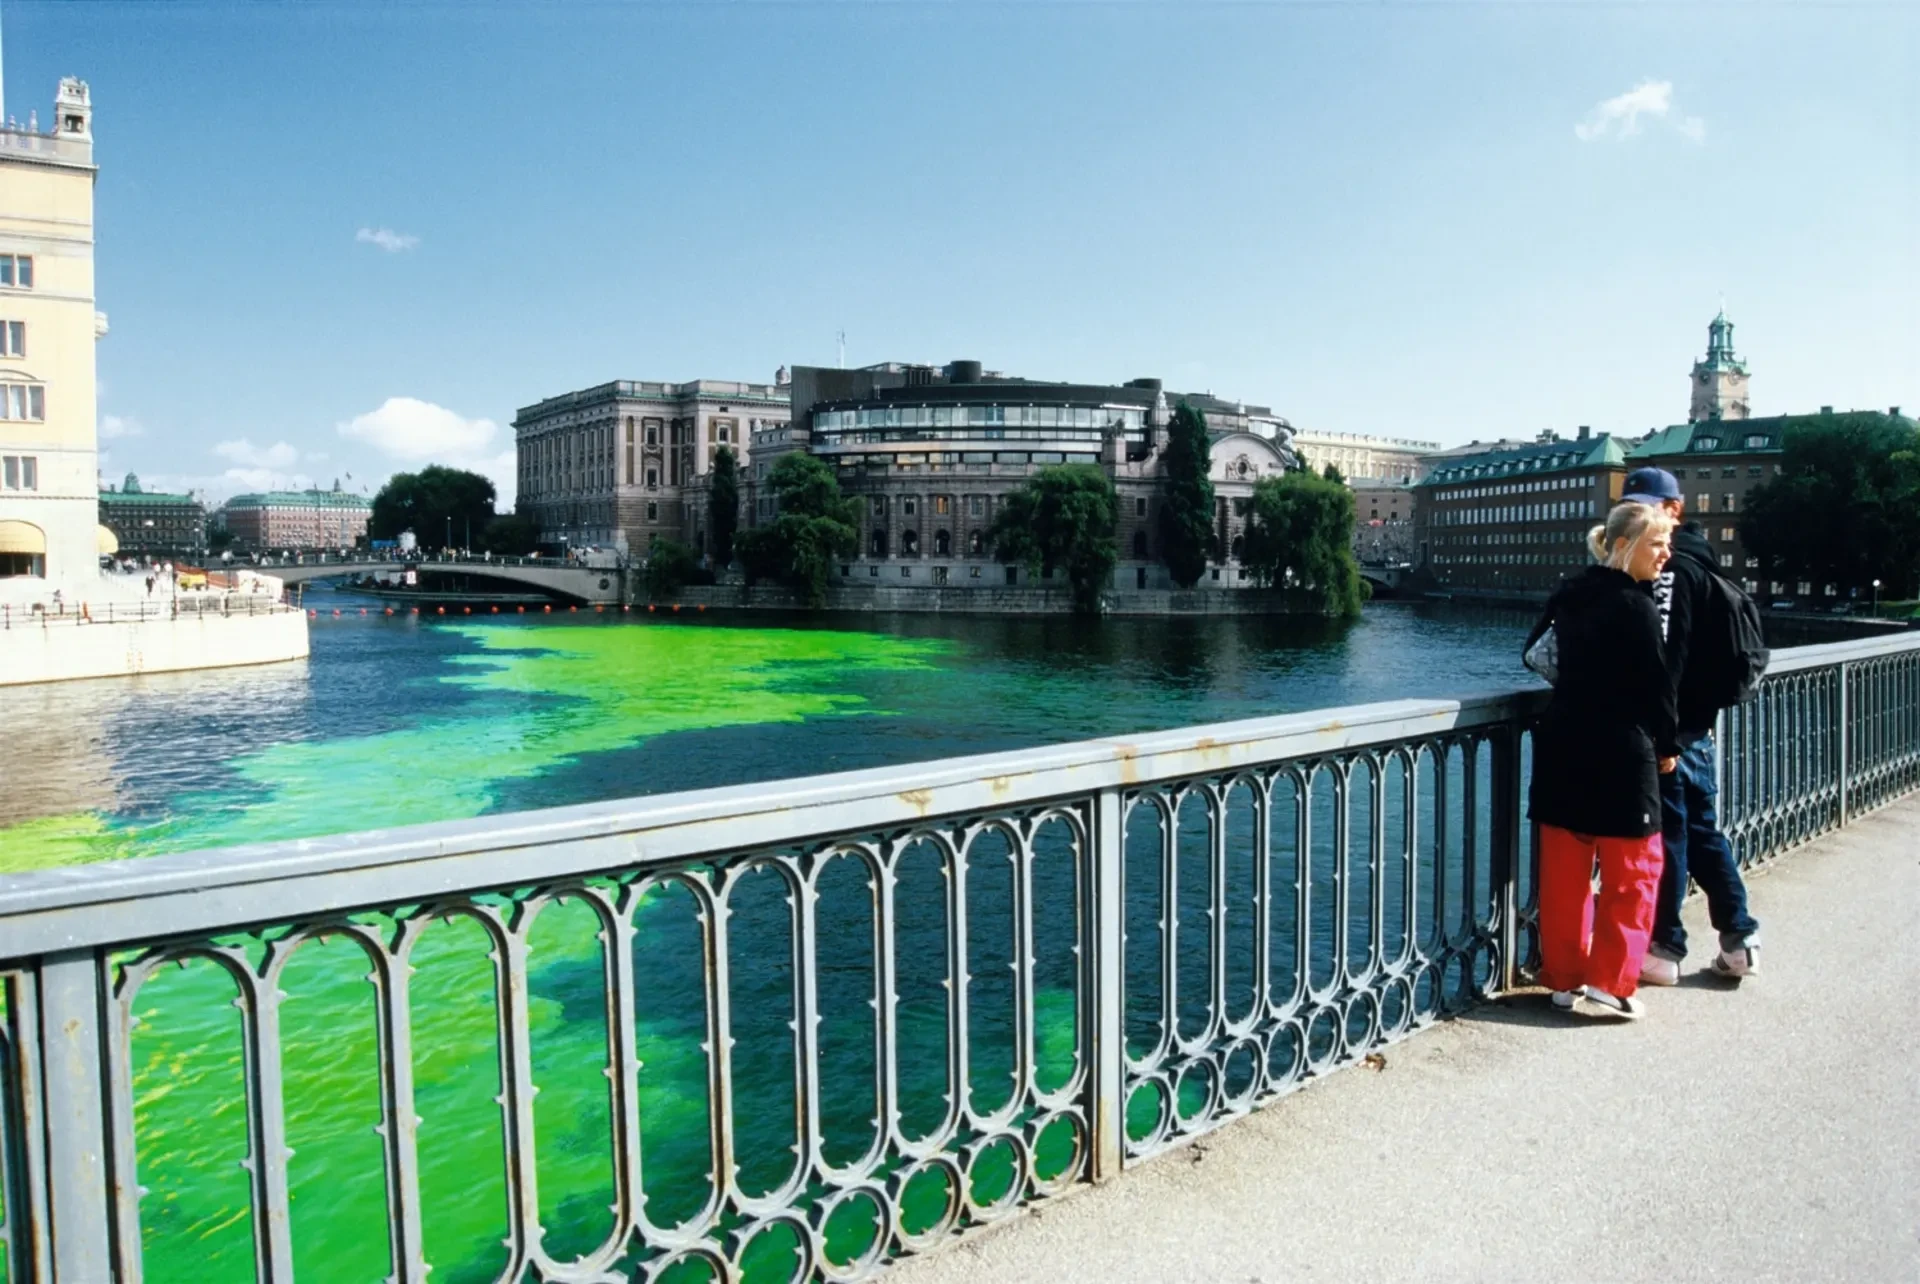 Green river, 1998 Stockholm, 2000 — 1998 Photo: Olafur Eliasson